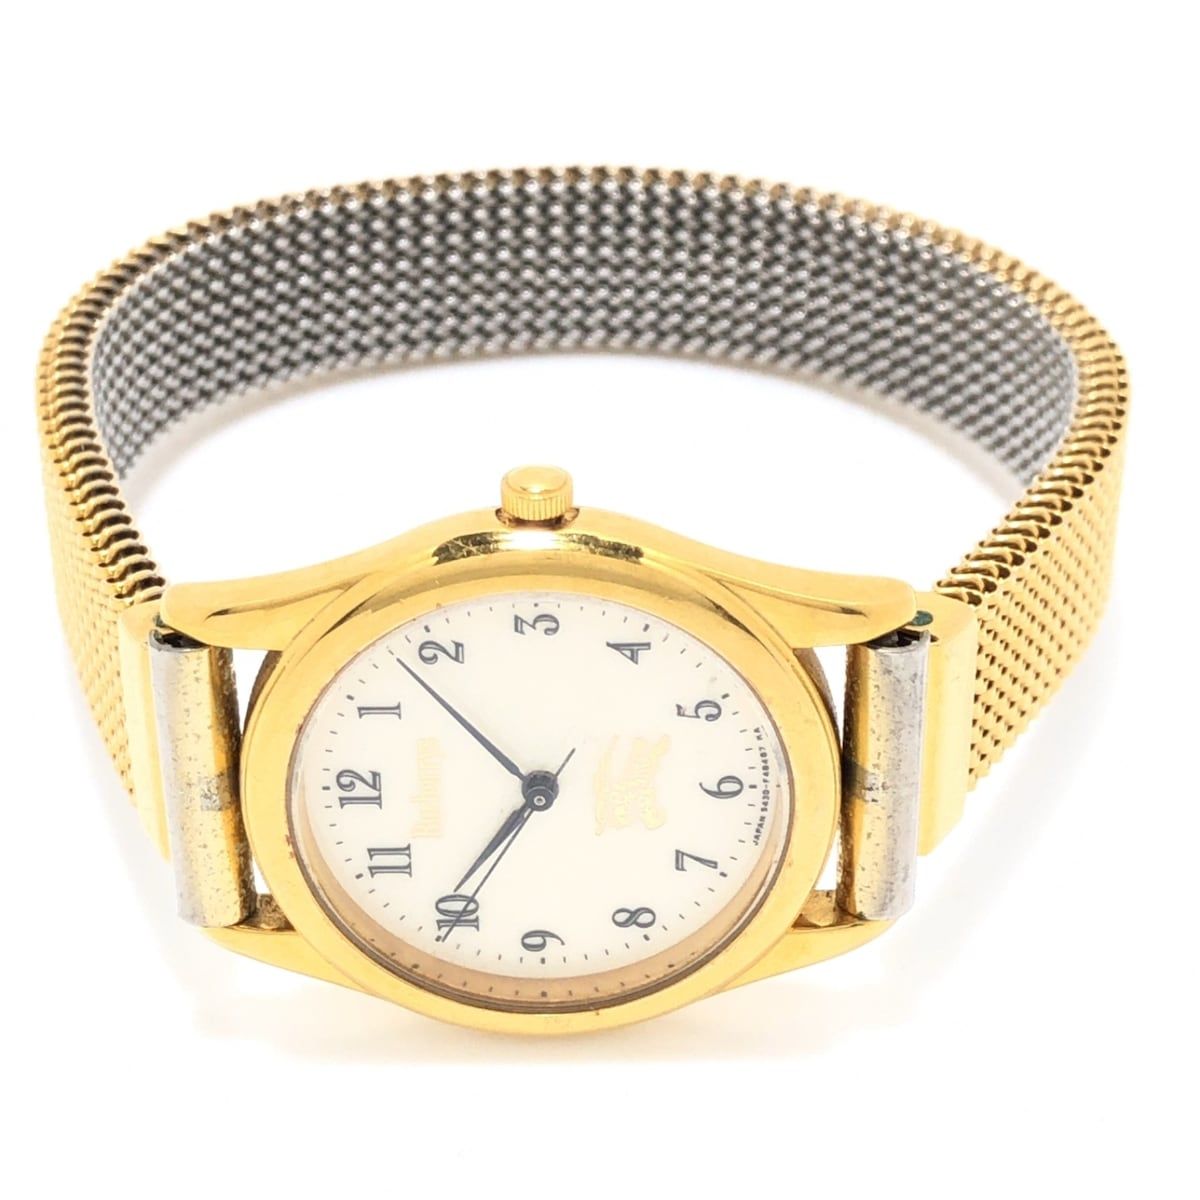 Burberry's(バーバリーズ) 腕時計 - 5430-F43674 レディース 白